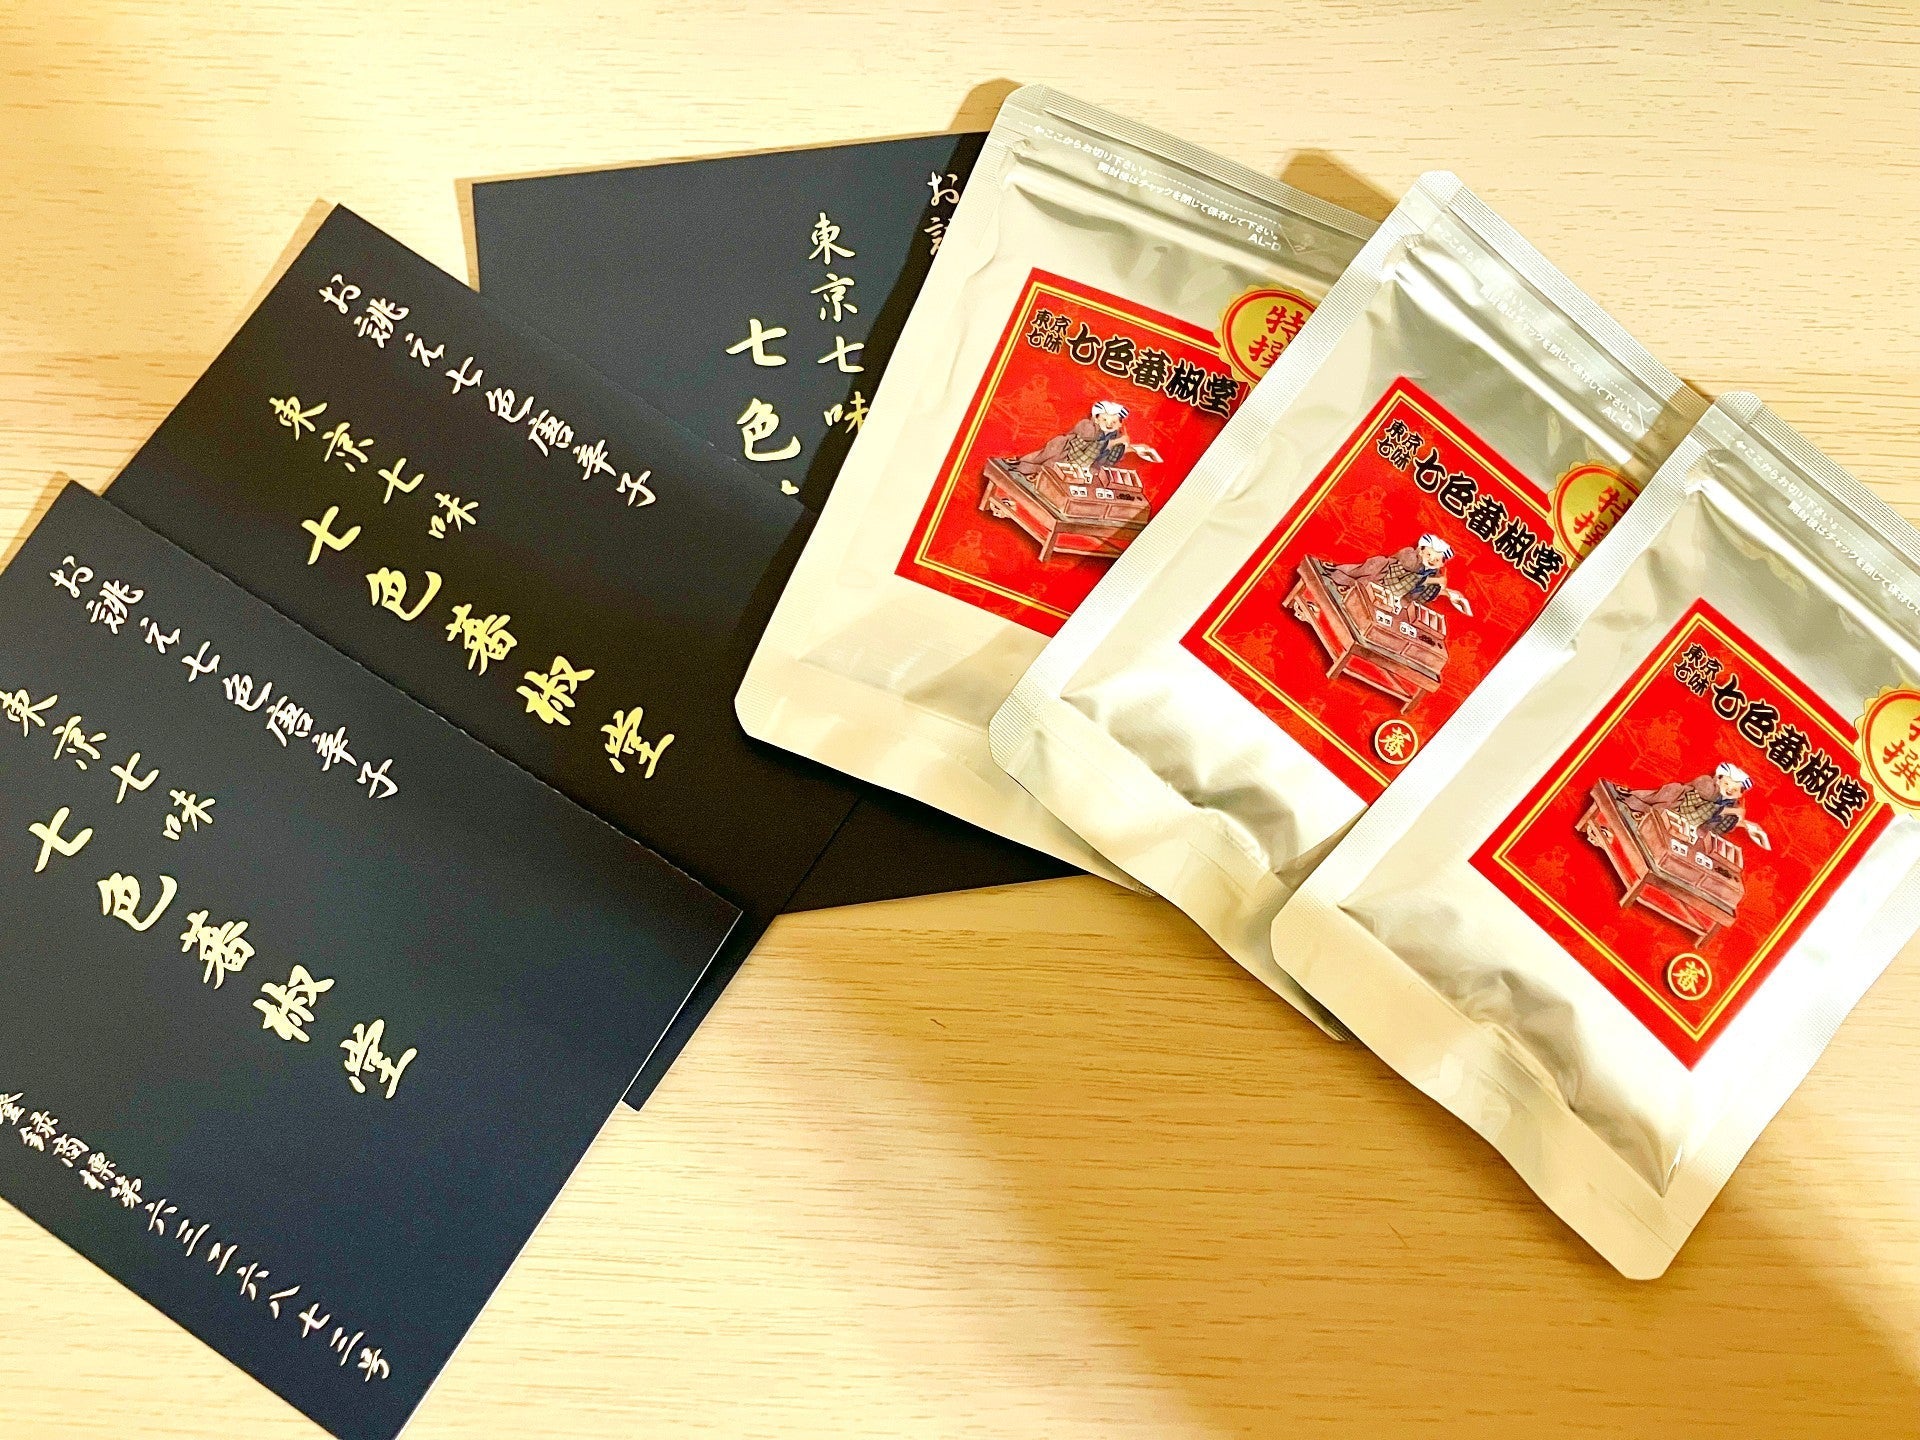 FLAVOR BOX: Japanese Spice Mix 'Shichimi Togarashi' Mixed Box Japanese Food Craftsman Shop